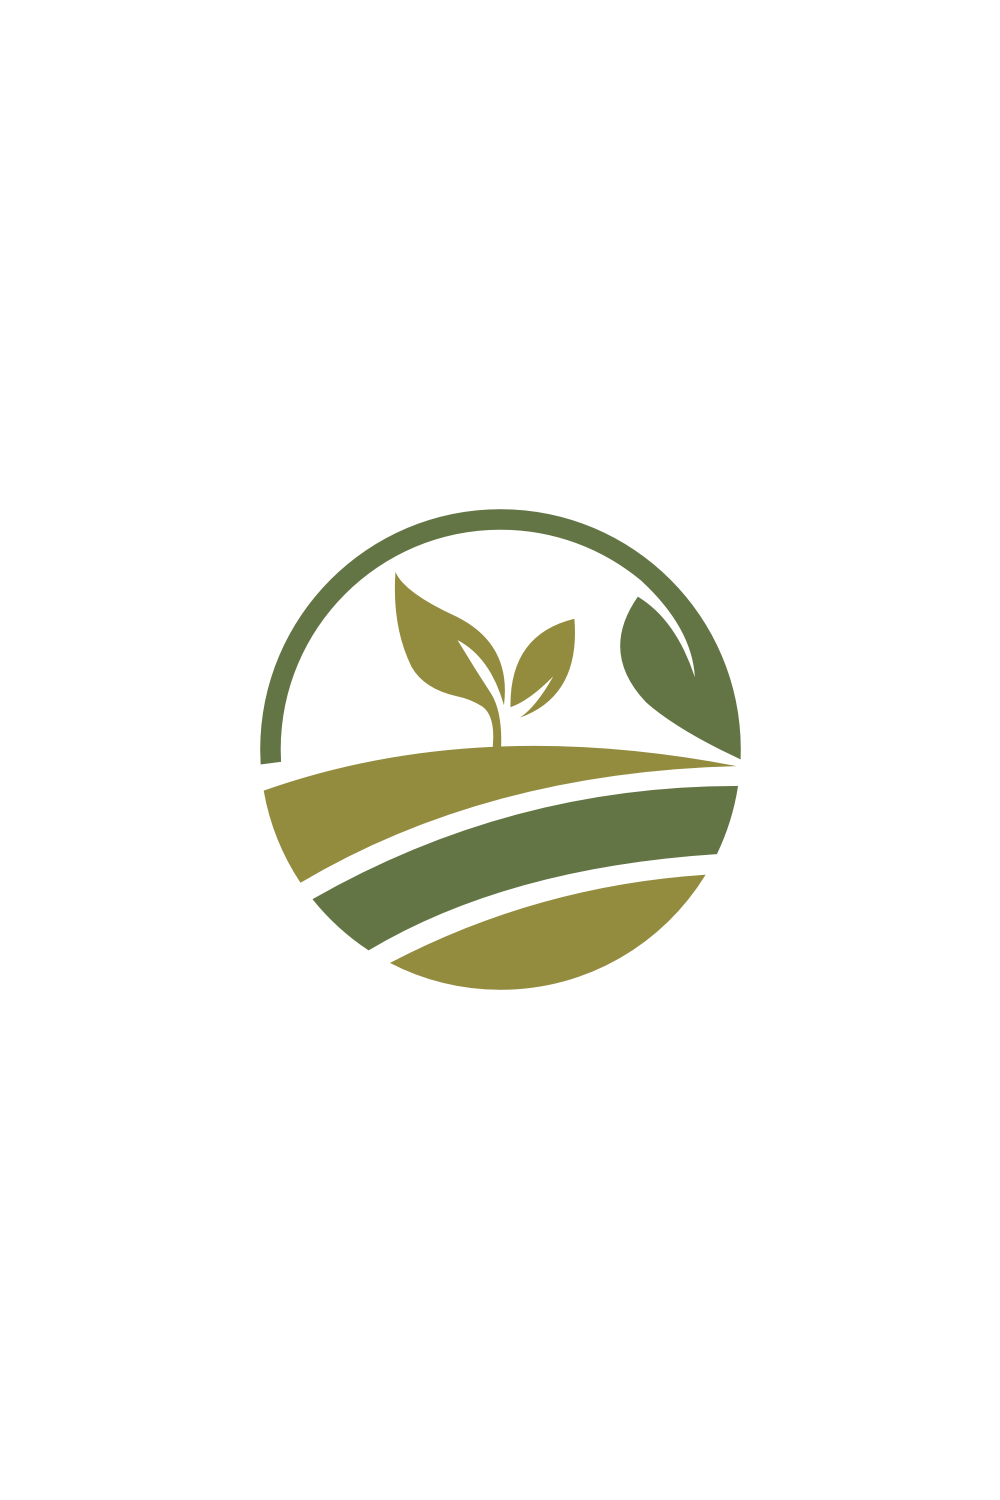 Green Farm Logos Vector Emblem Pinterest preview.